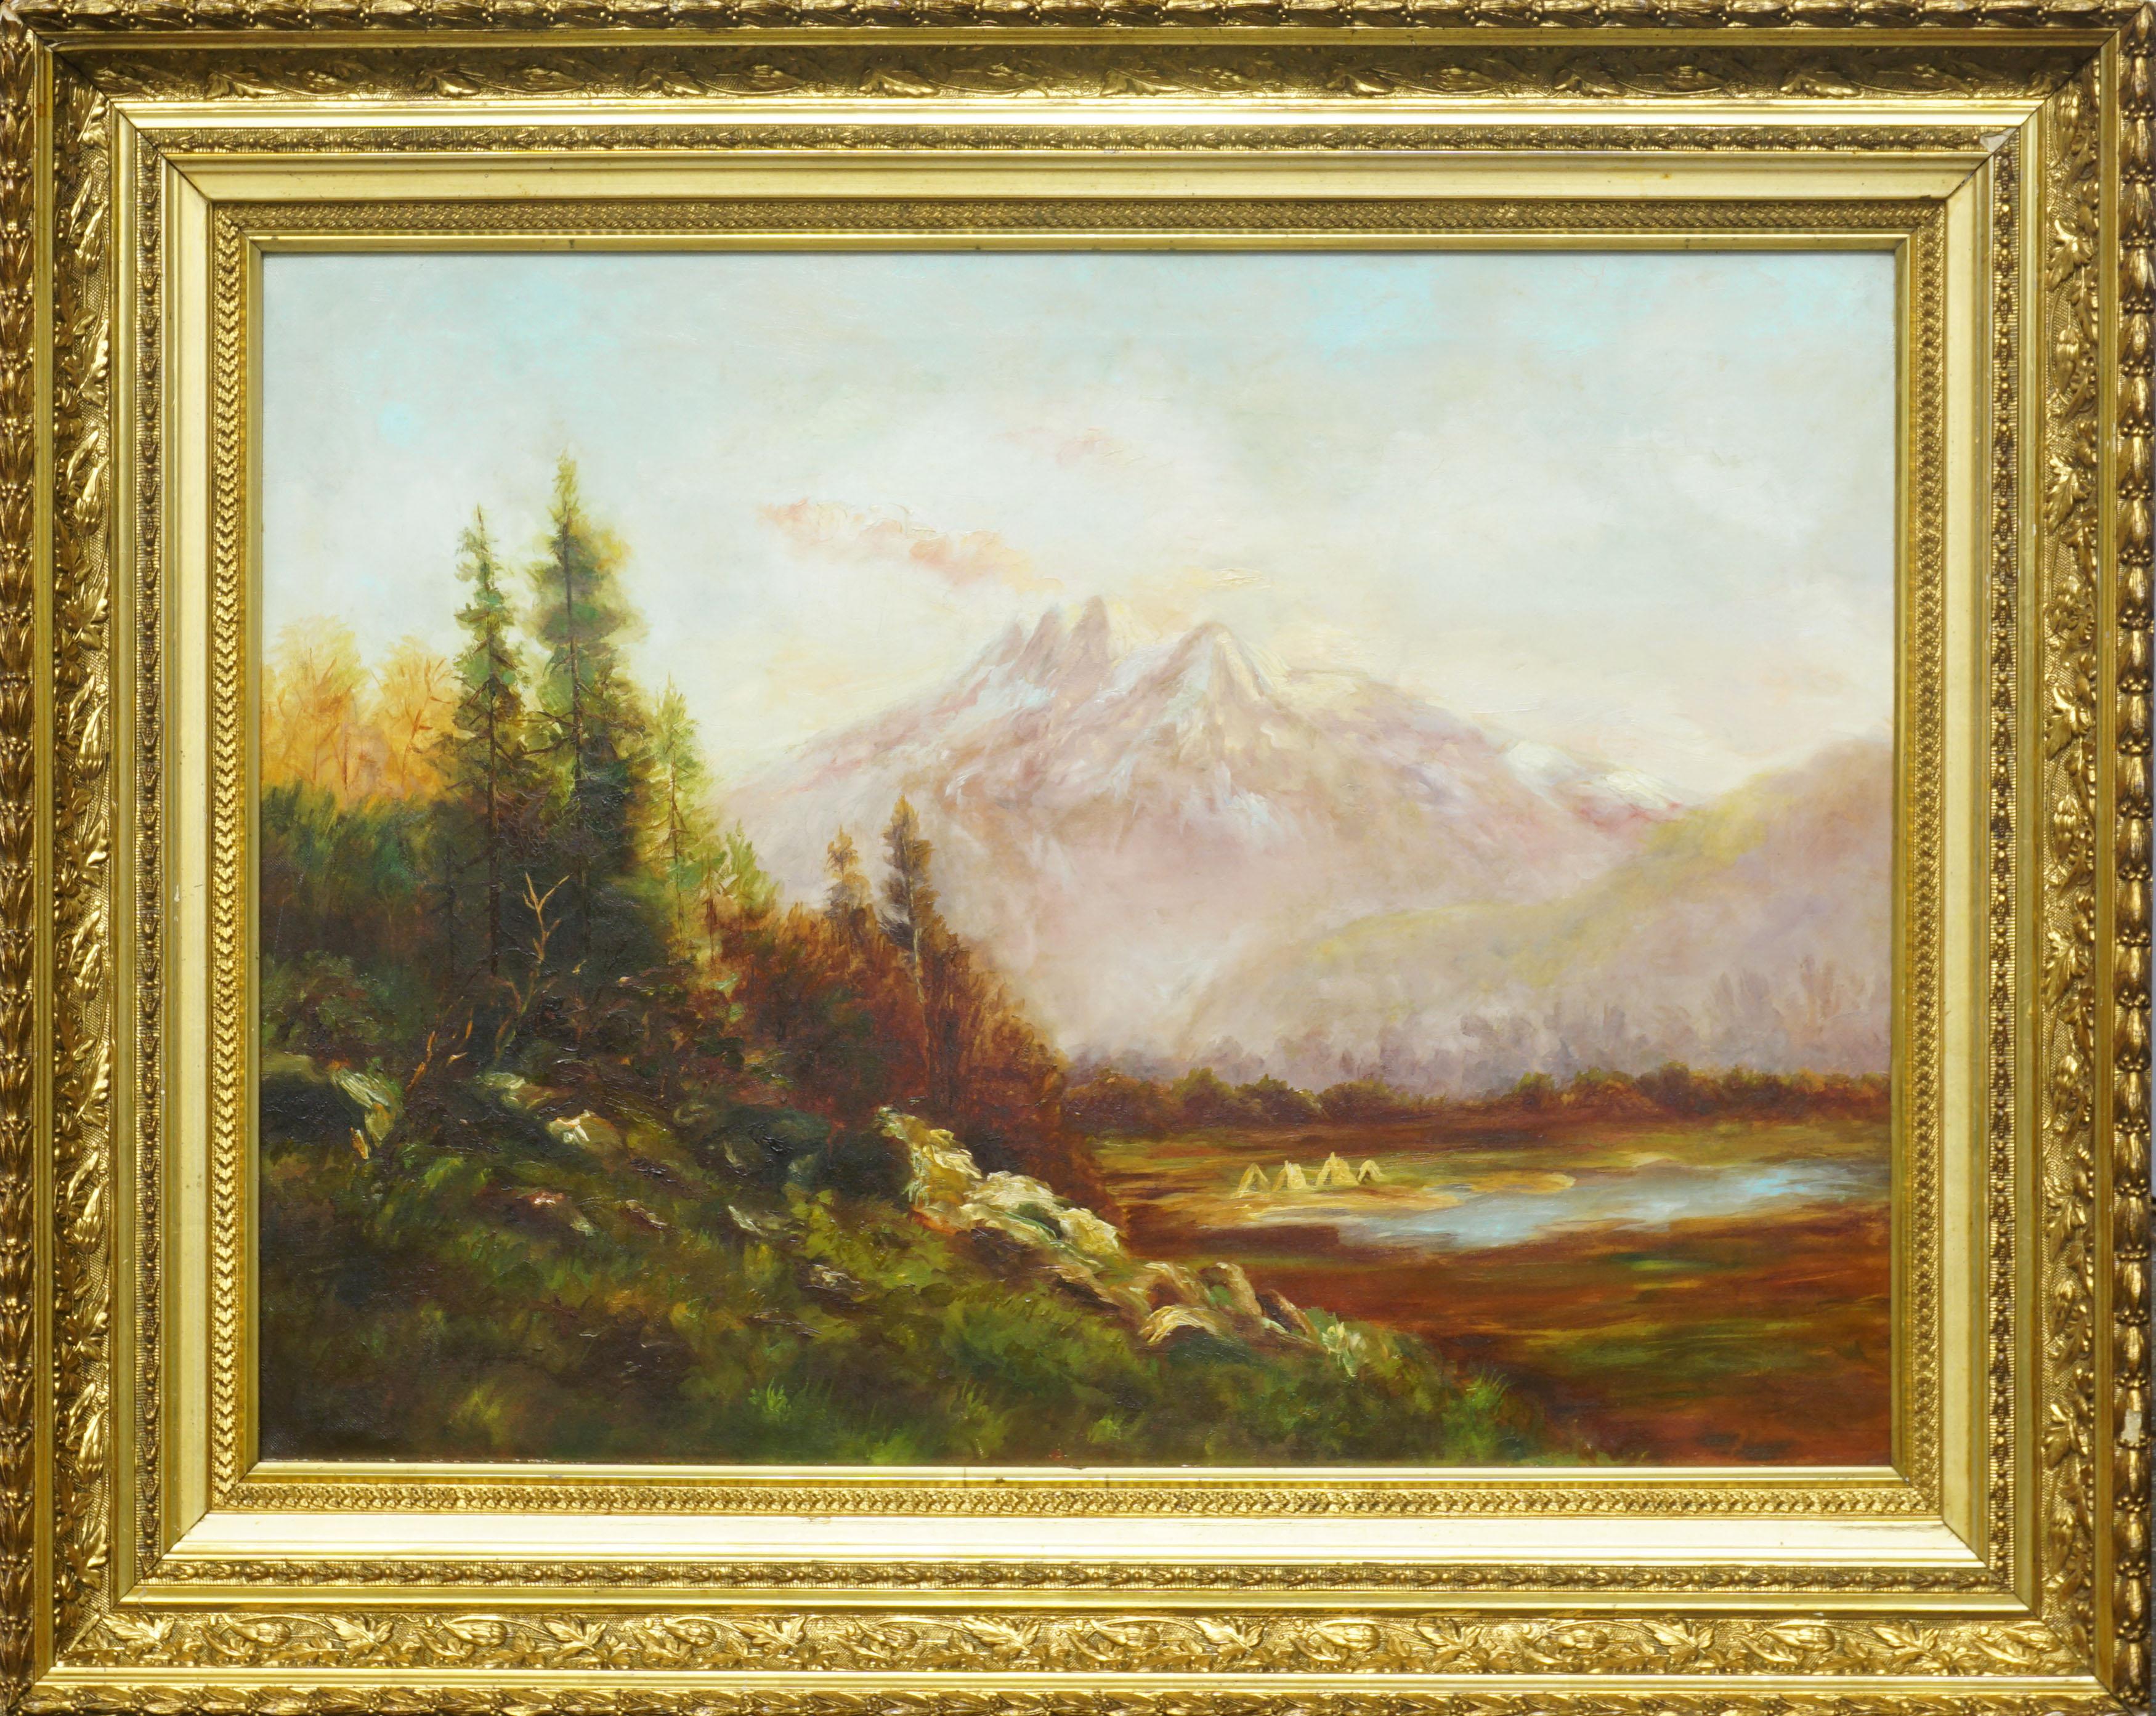 Unknown Landscape Painting - Mount Baker with Encampment - In Style of Albert Bierstadt